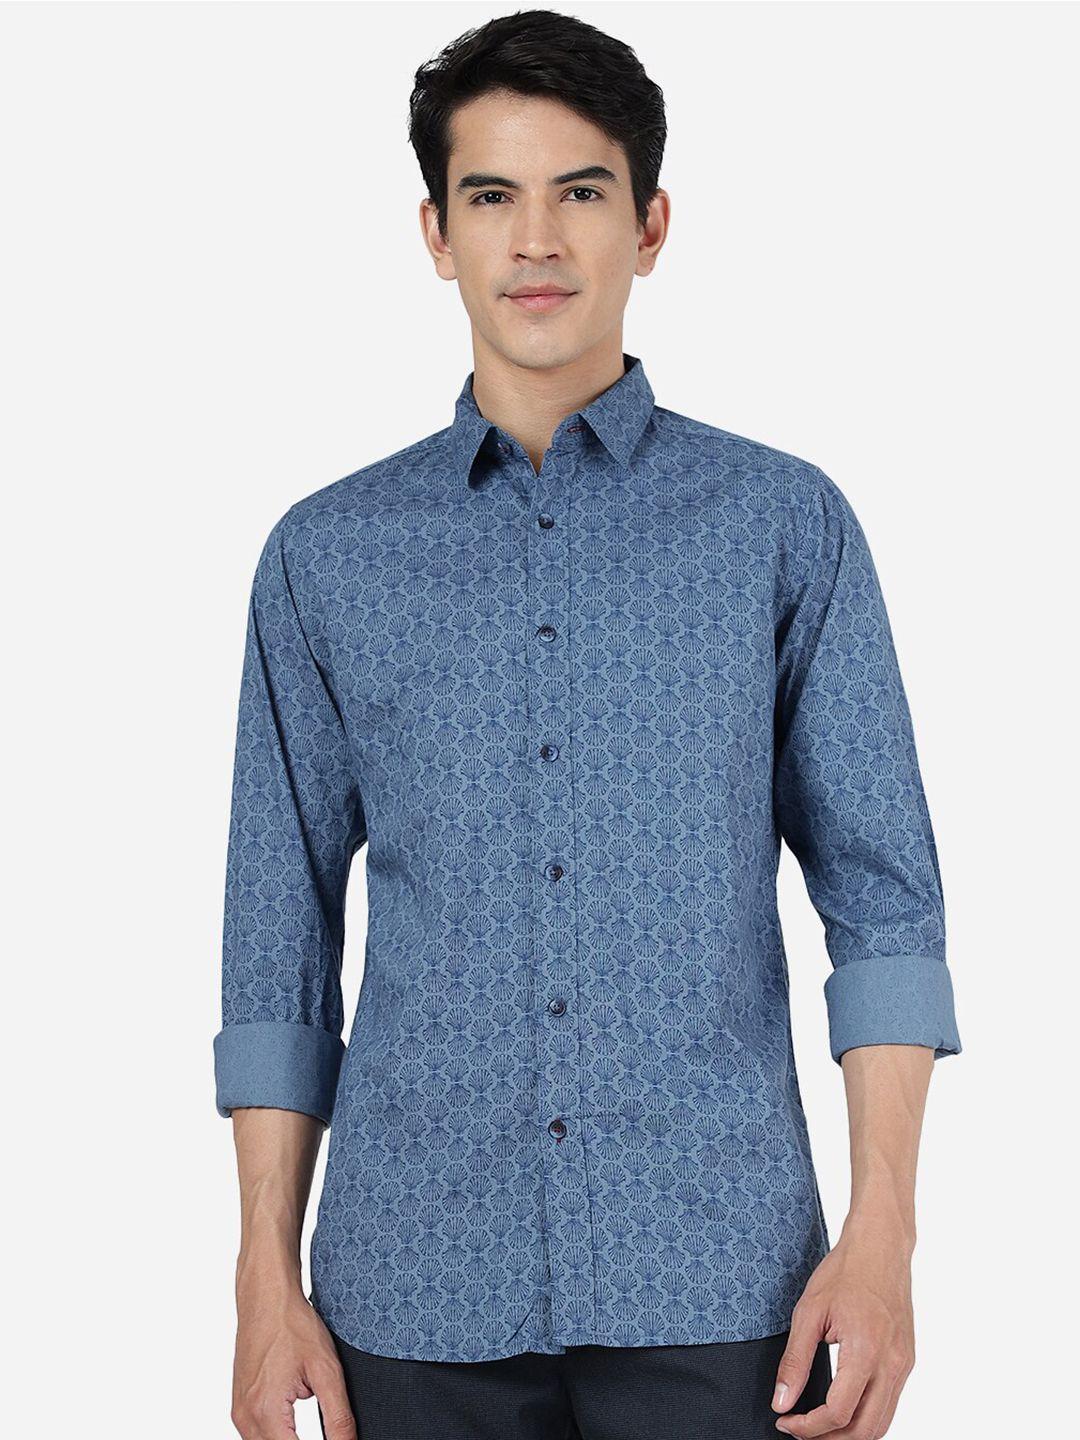 jade blue  slim fit conversational printed spread collar long sleeve cotton casual shirt